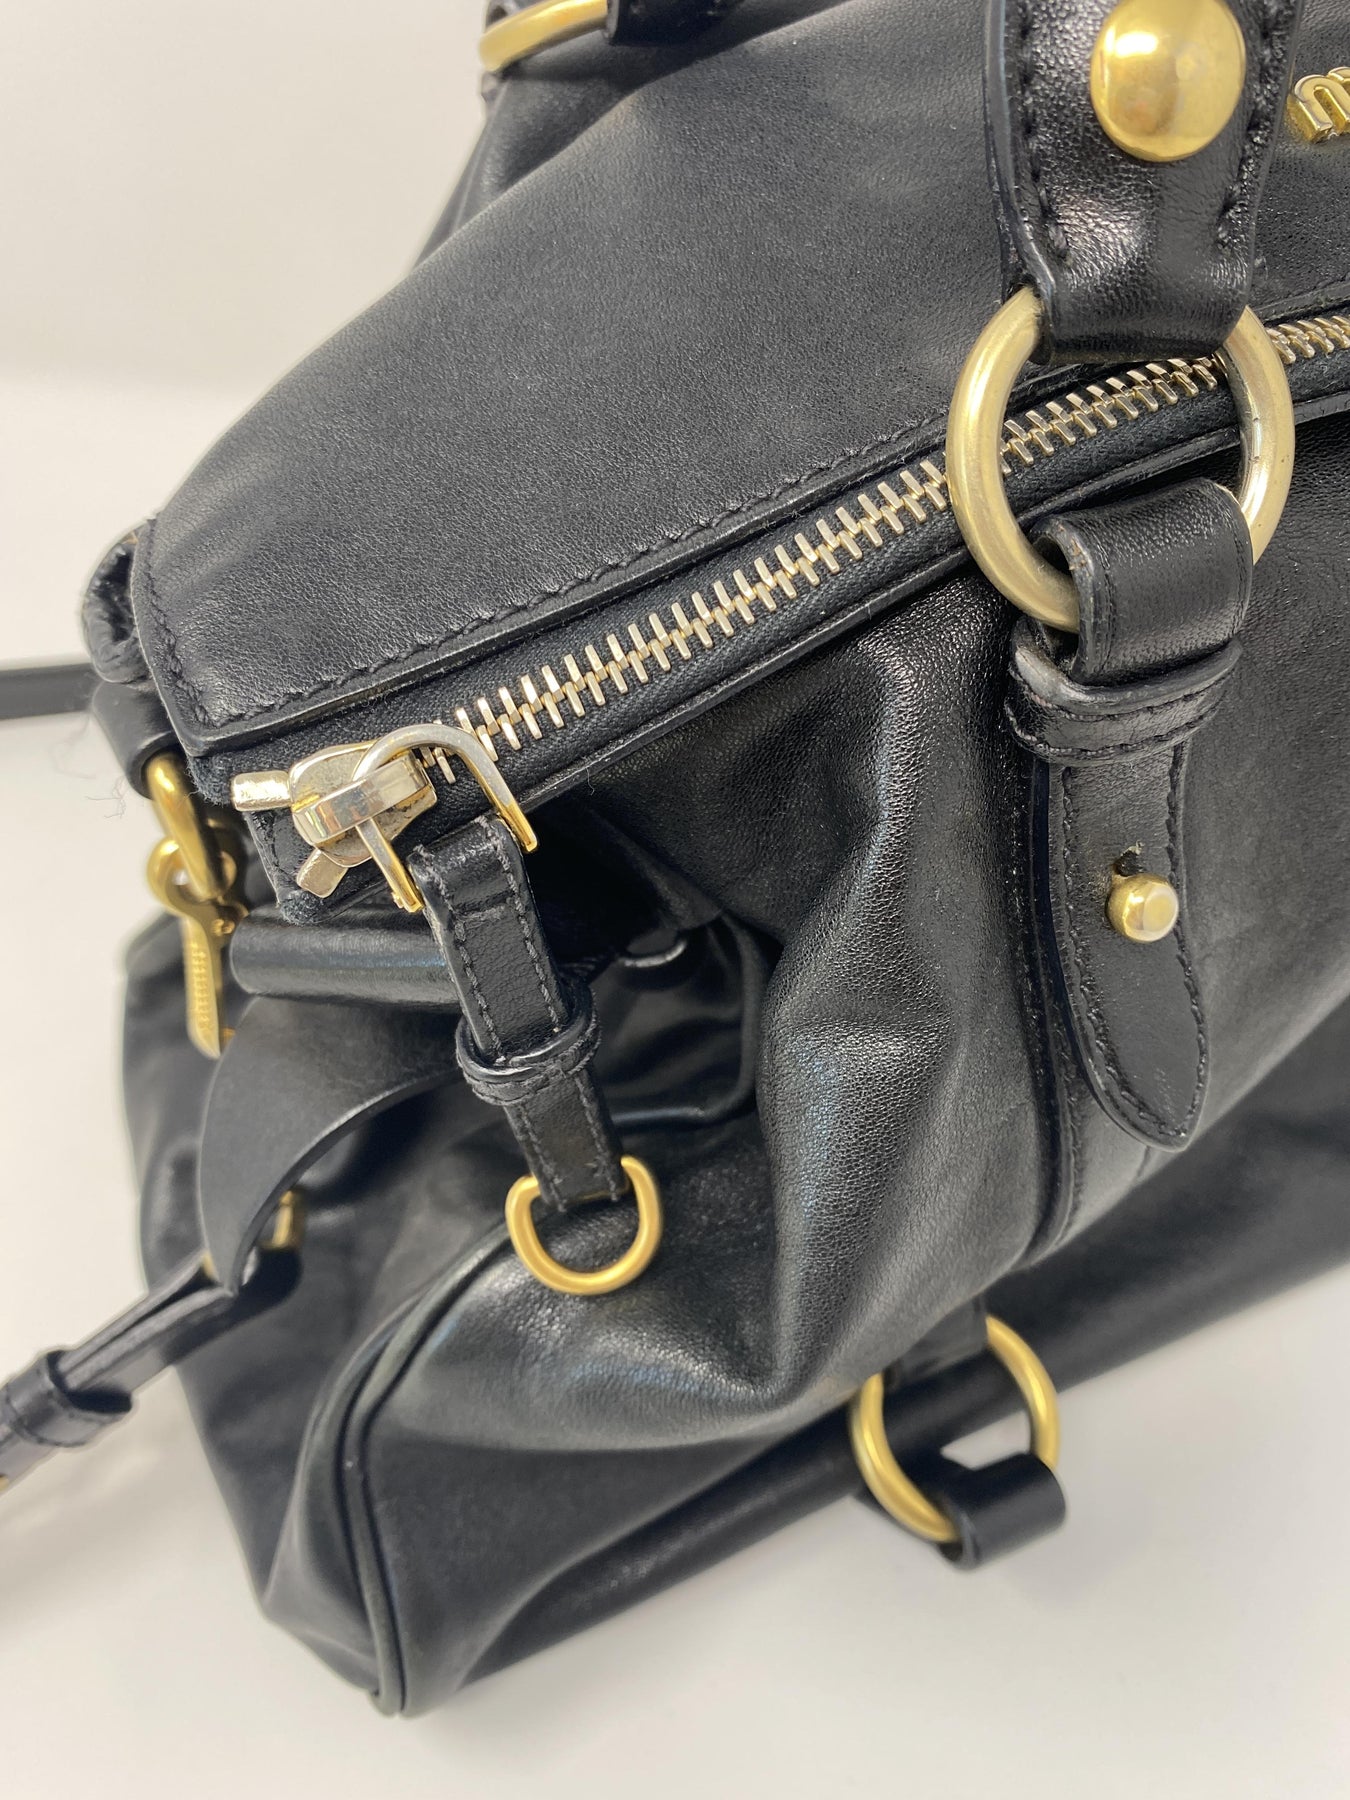 Miu Miu Vitello Lux Large Bow Bag